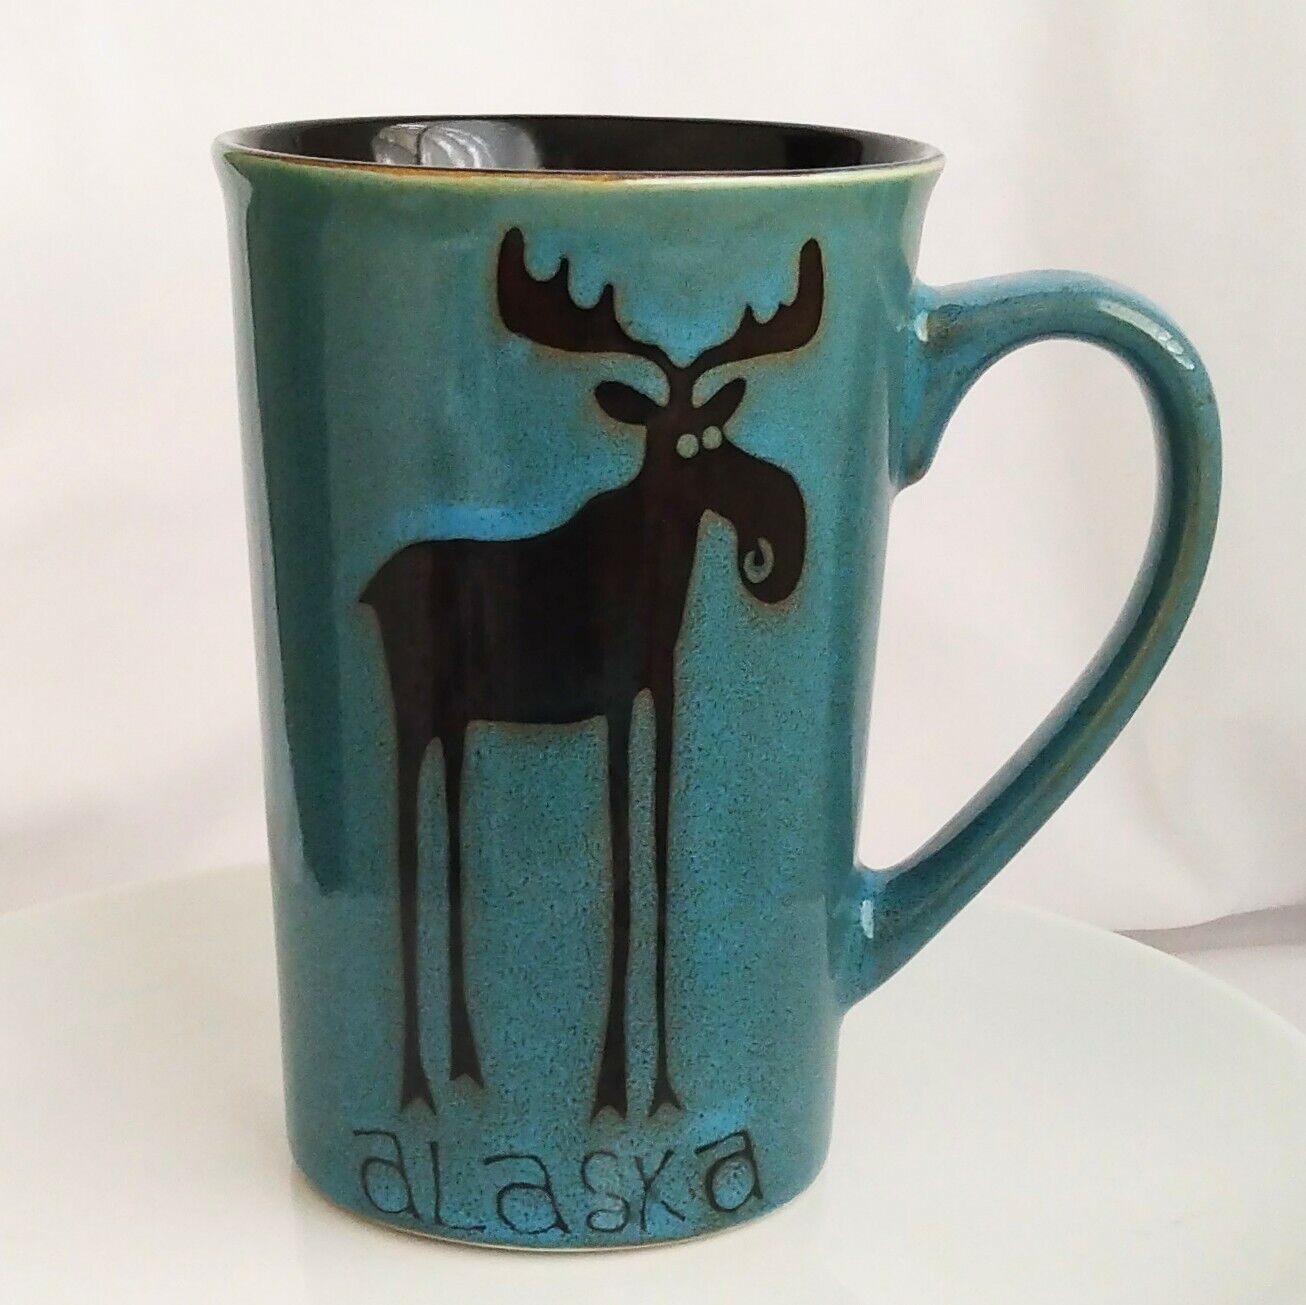 Arctic Circle Tall Alaskan Leggy Moose Mug 16 oz Stoneware Blue Speckled Glaze